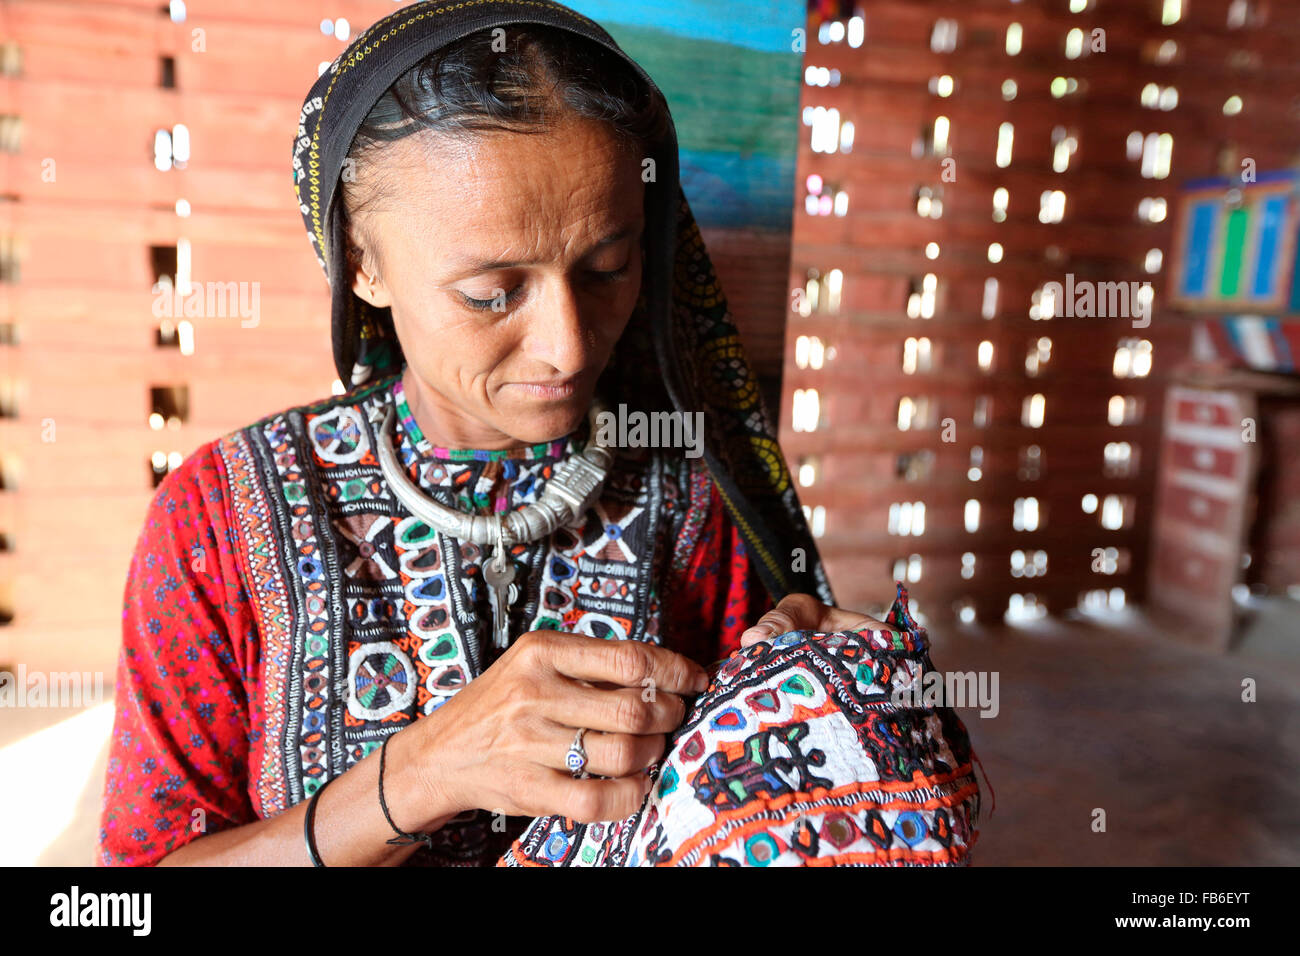 Fakirani Jat tribe, Fakirani Jat tribe embroidery, Kutch District, Gujarat, India Stock Photo